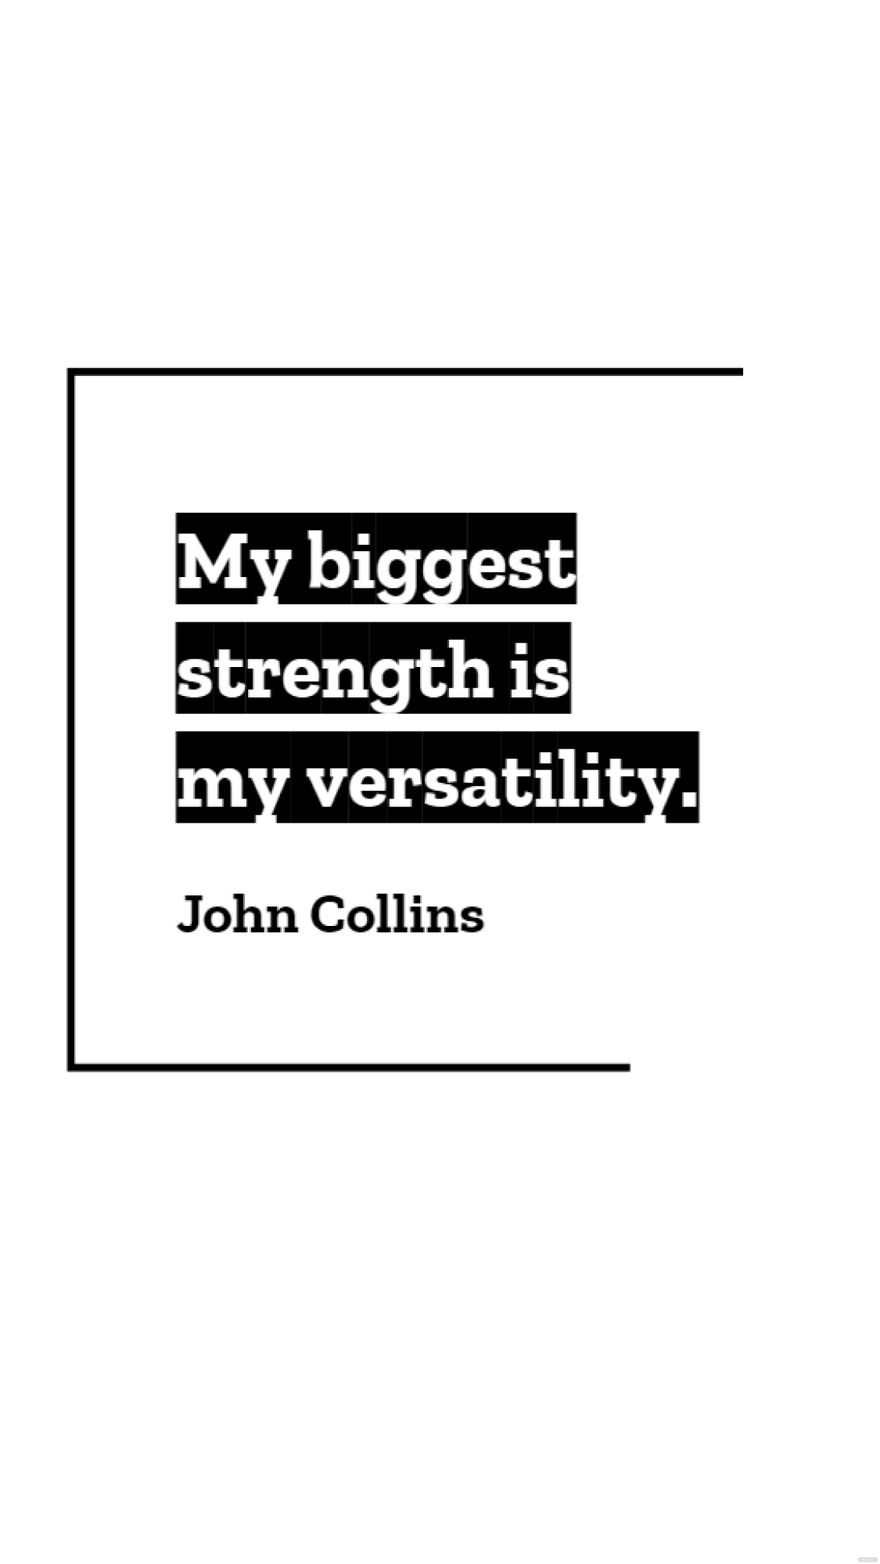 John Collins - My biggest strength is my versatility.